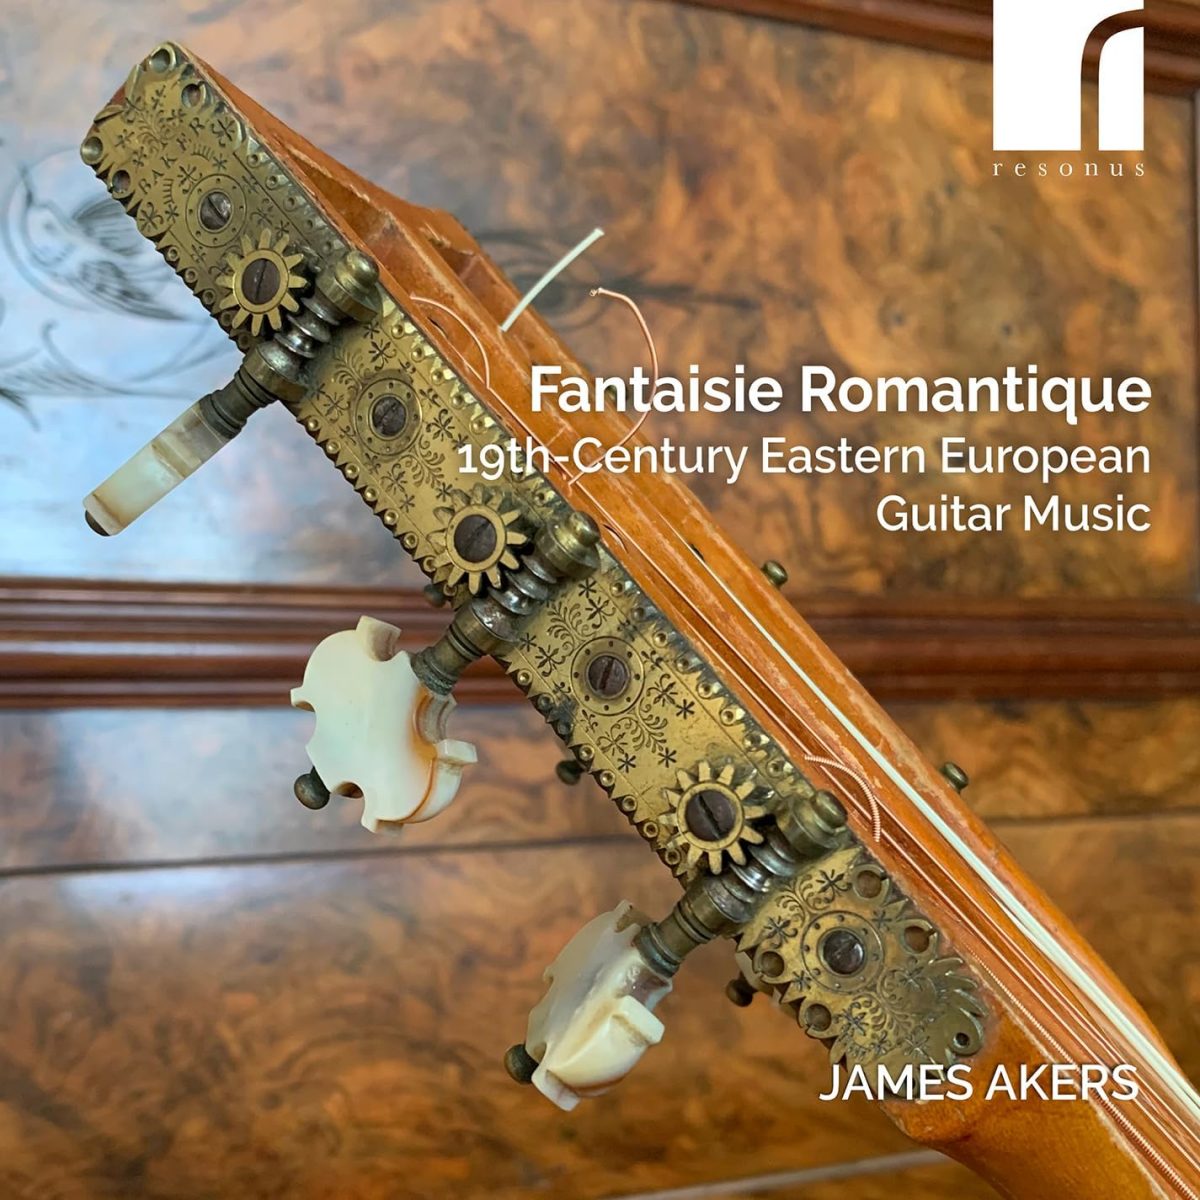 James Akers Fantaisie Romantique CD cover